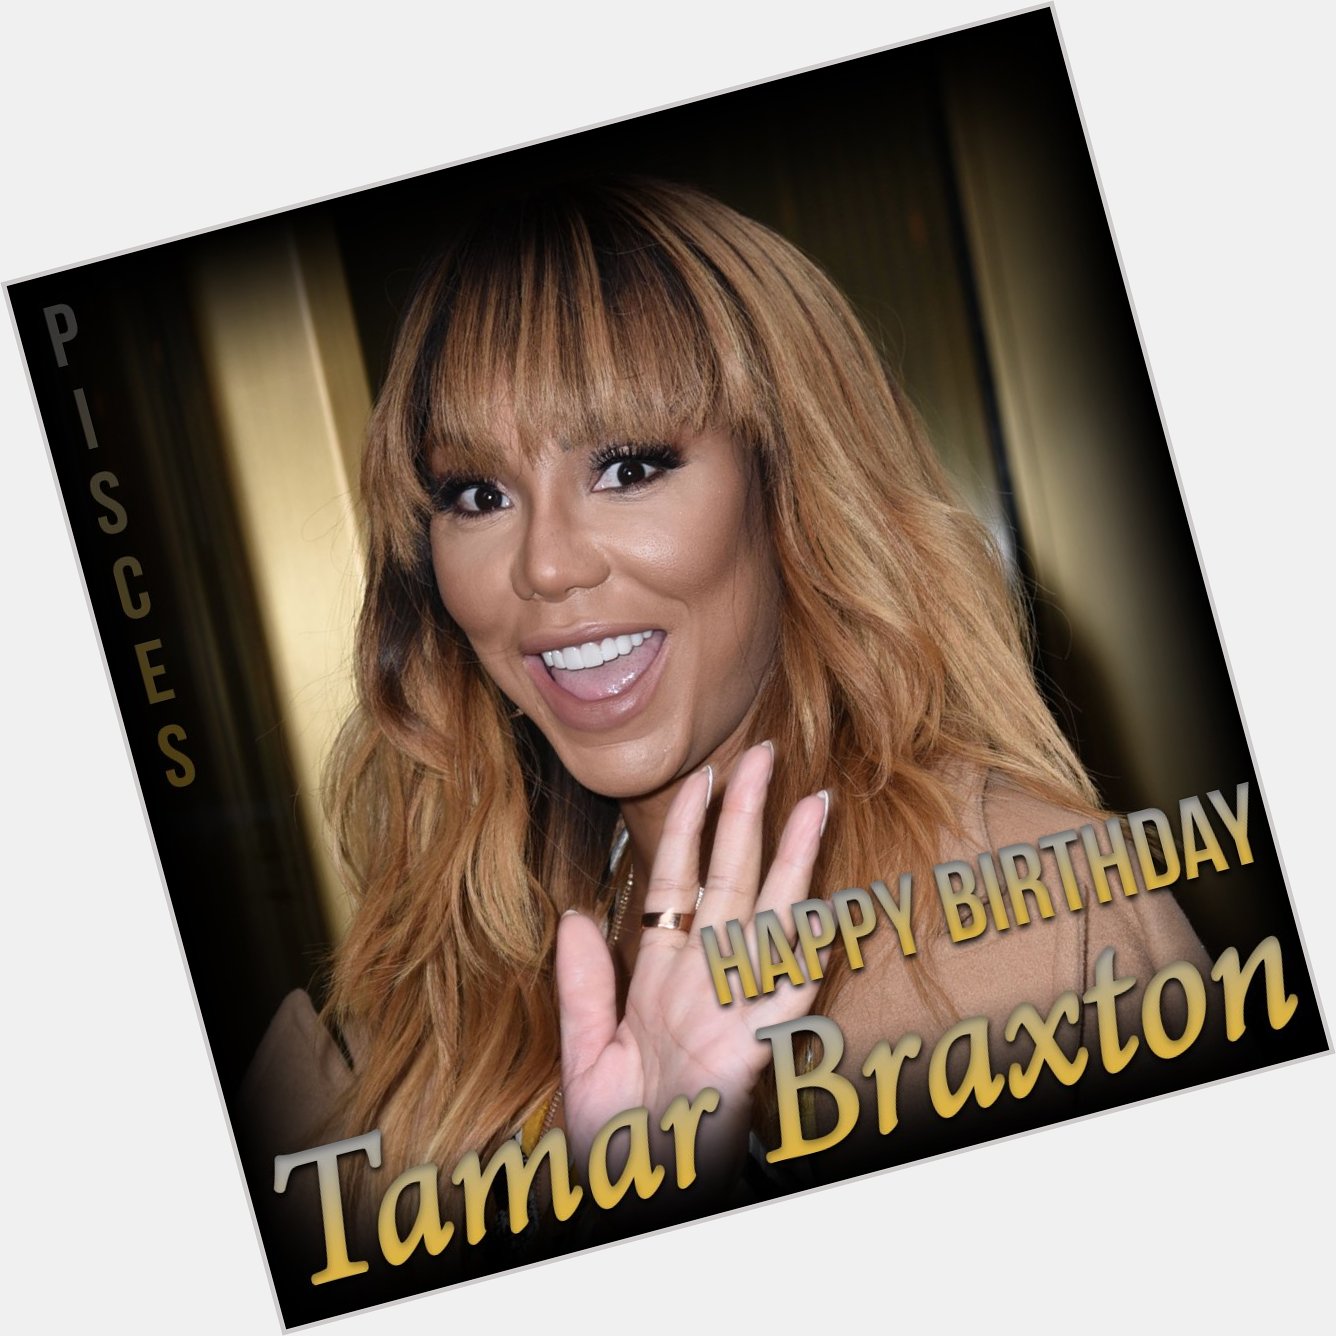 Happy Birthday to Tamar Braxton! The singer turns 42 today. 